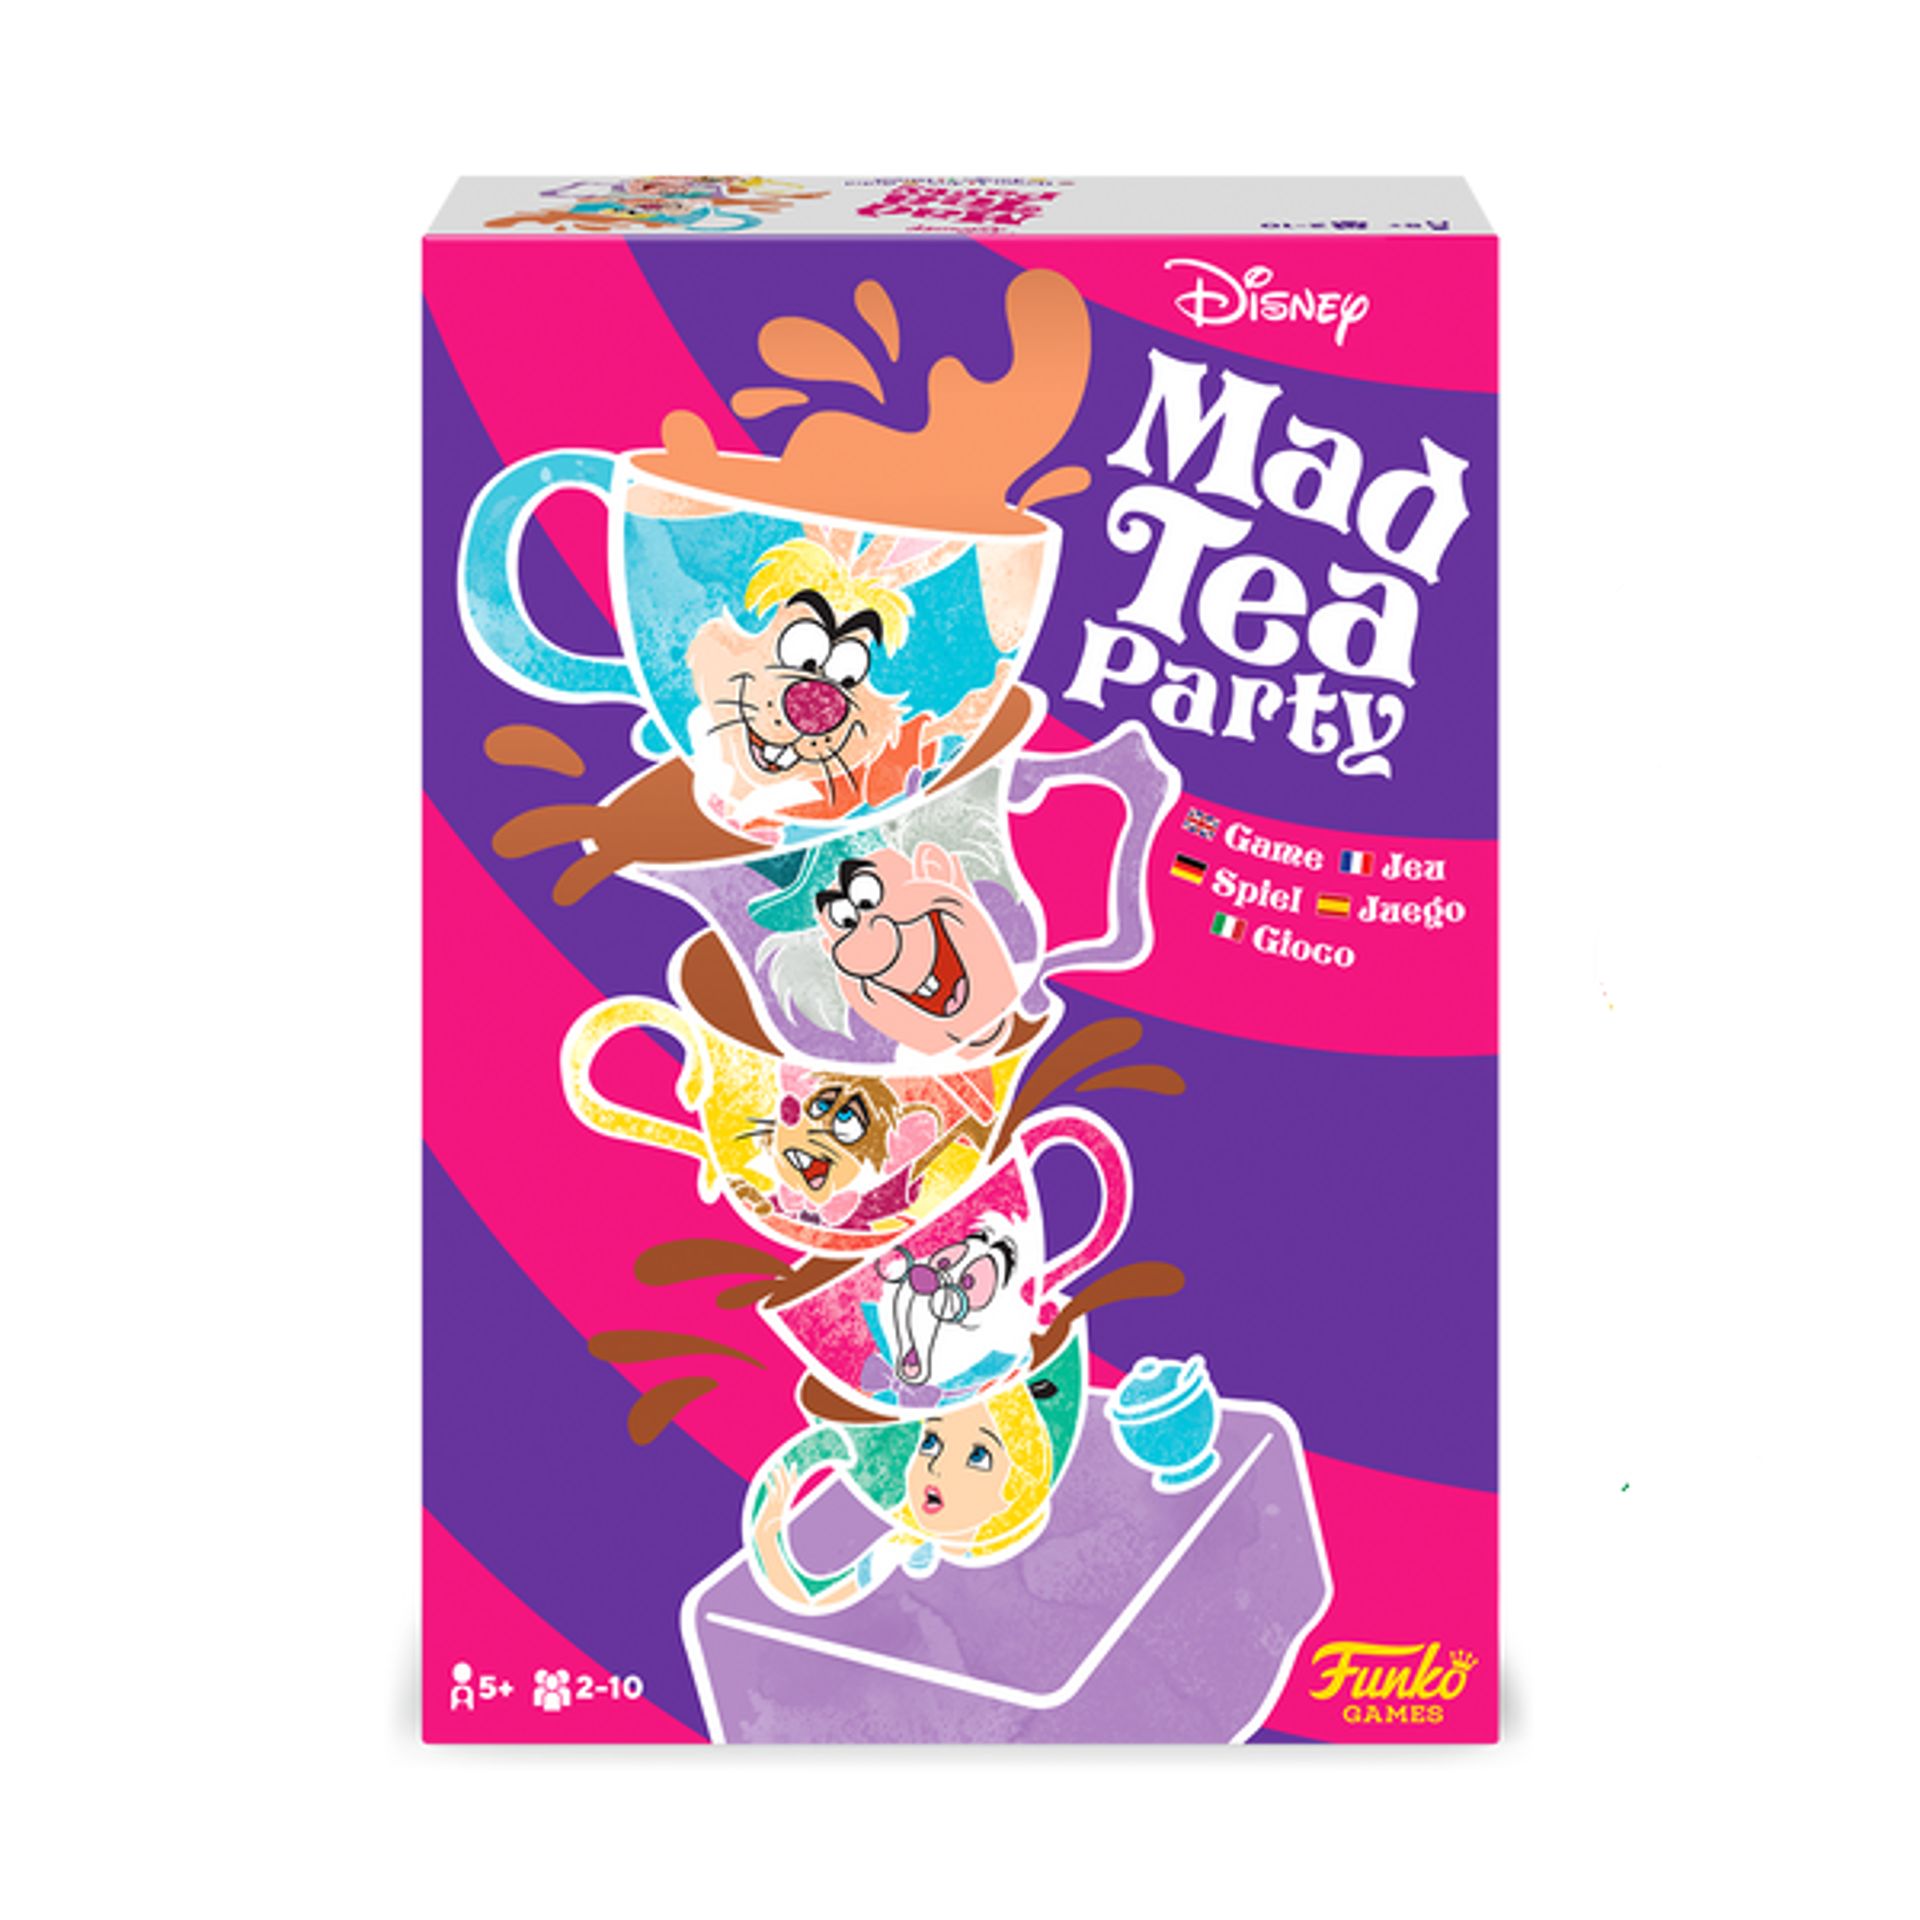 Funko Children's Game: Disney - Mad Tea Party